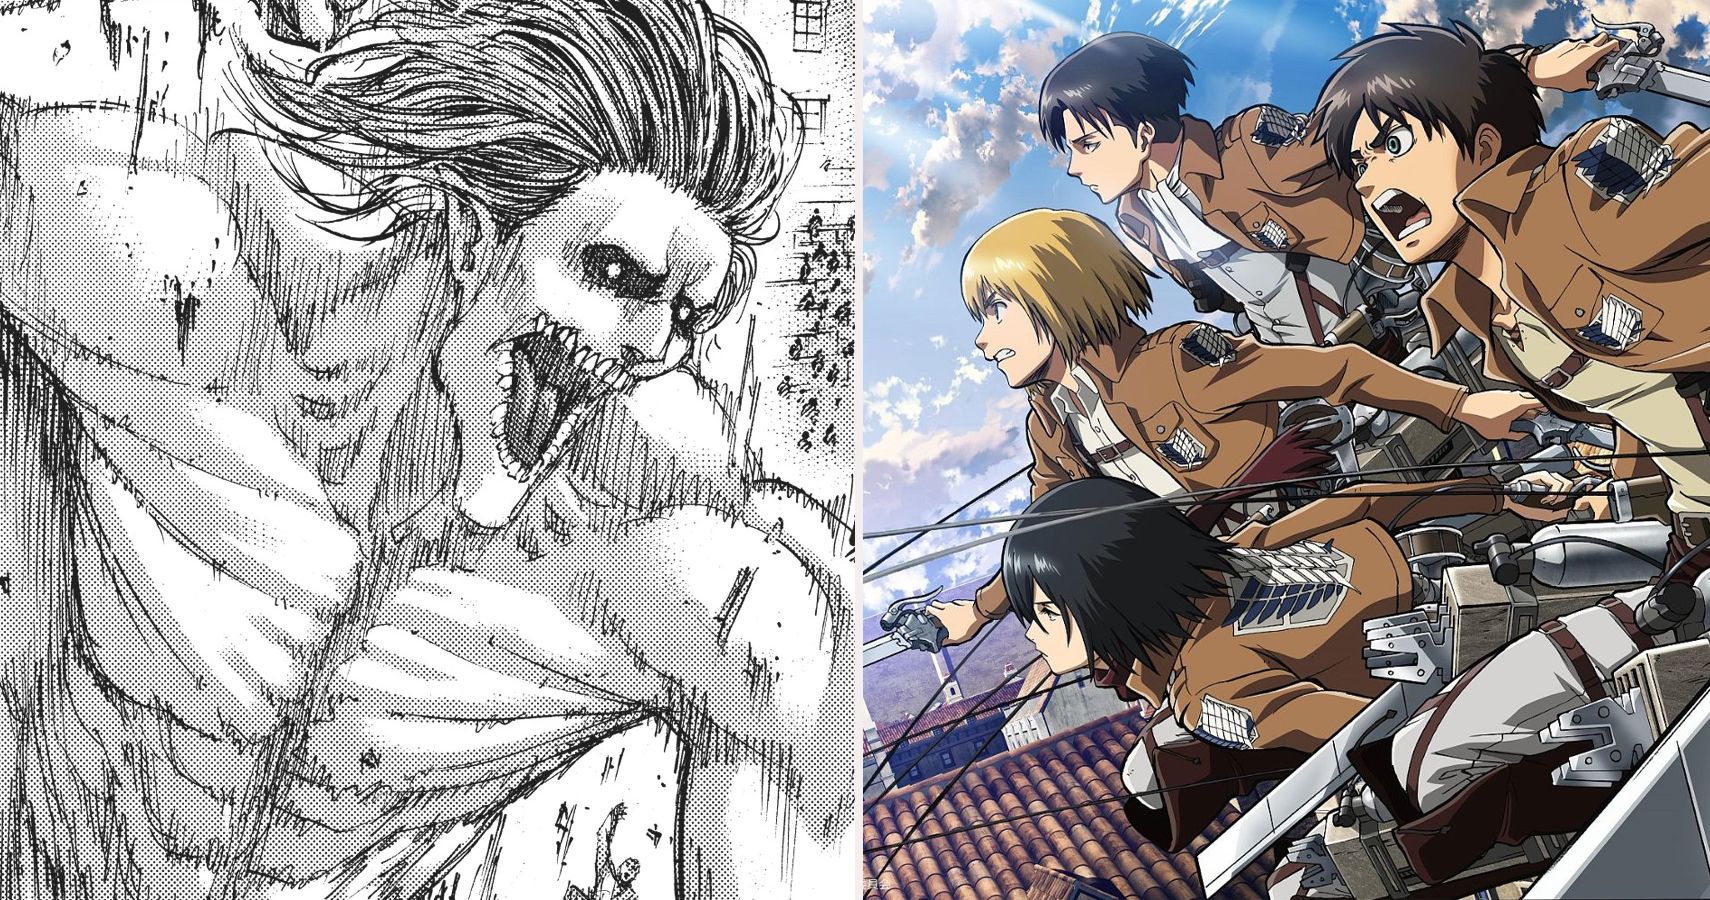 Snk Anime / Manga  Manga vs anime, Anime, Attack on titan